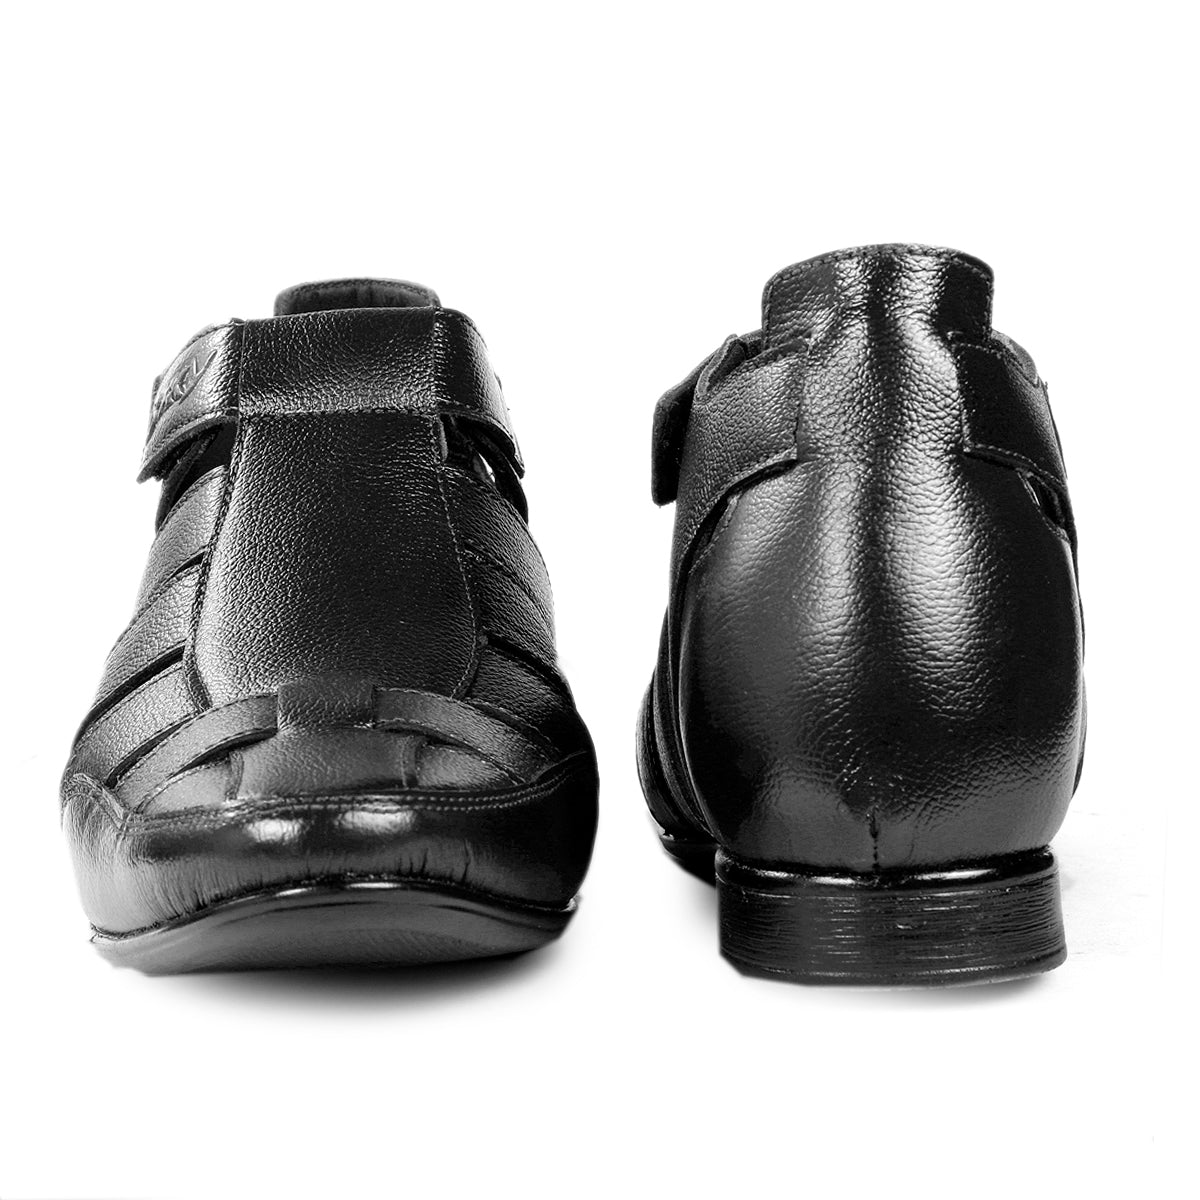 BXXY 3 Inch (7.6 cm) Hidden Height Increasing Casual Roman Sandals for Men ( Instant 3 Inches Hidden Height Gainer )